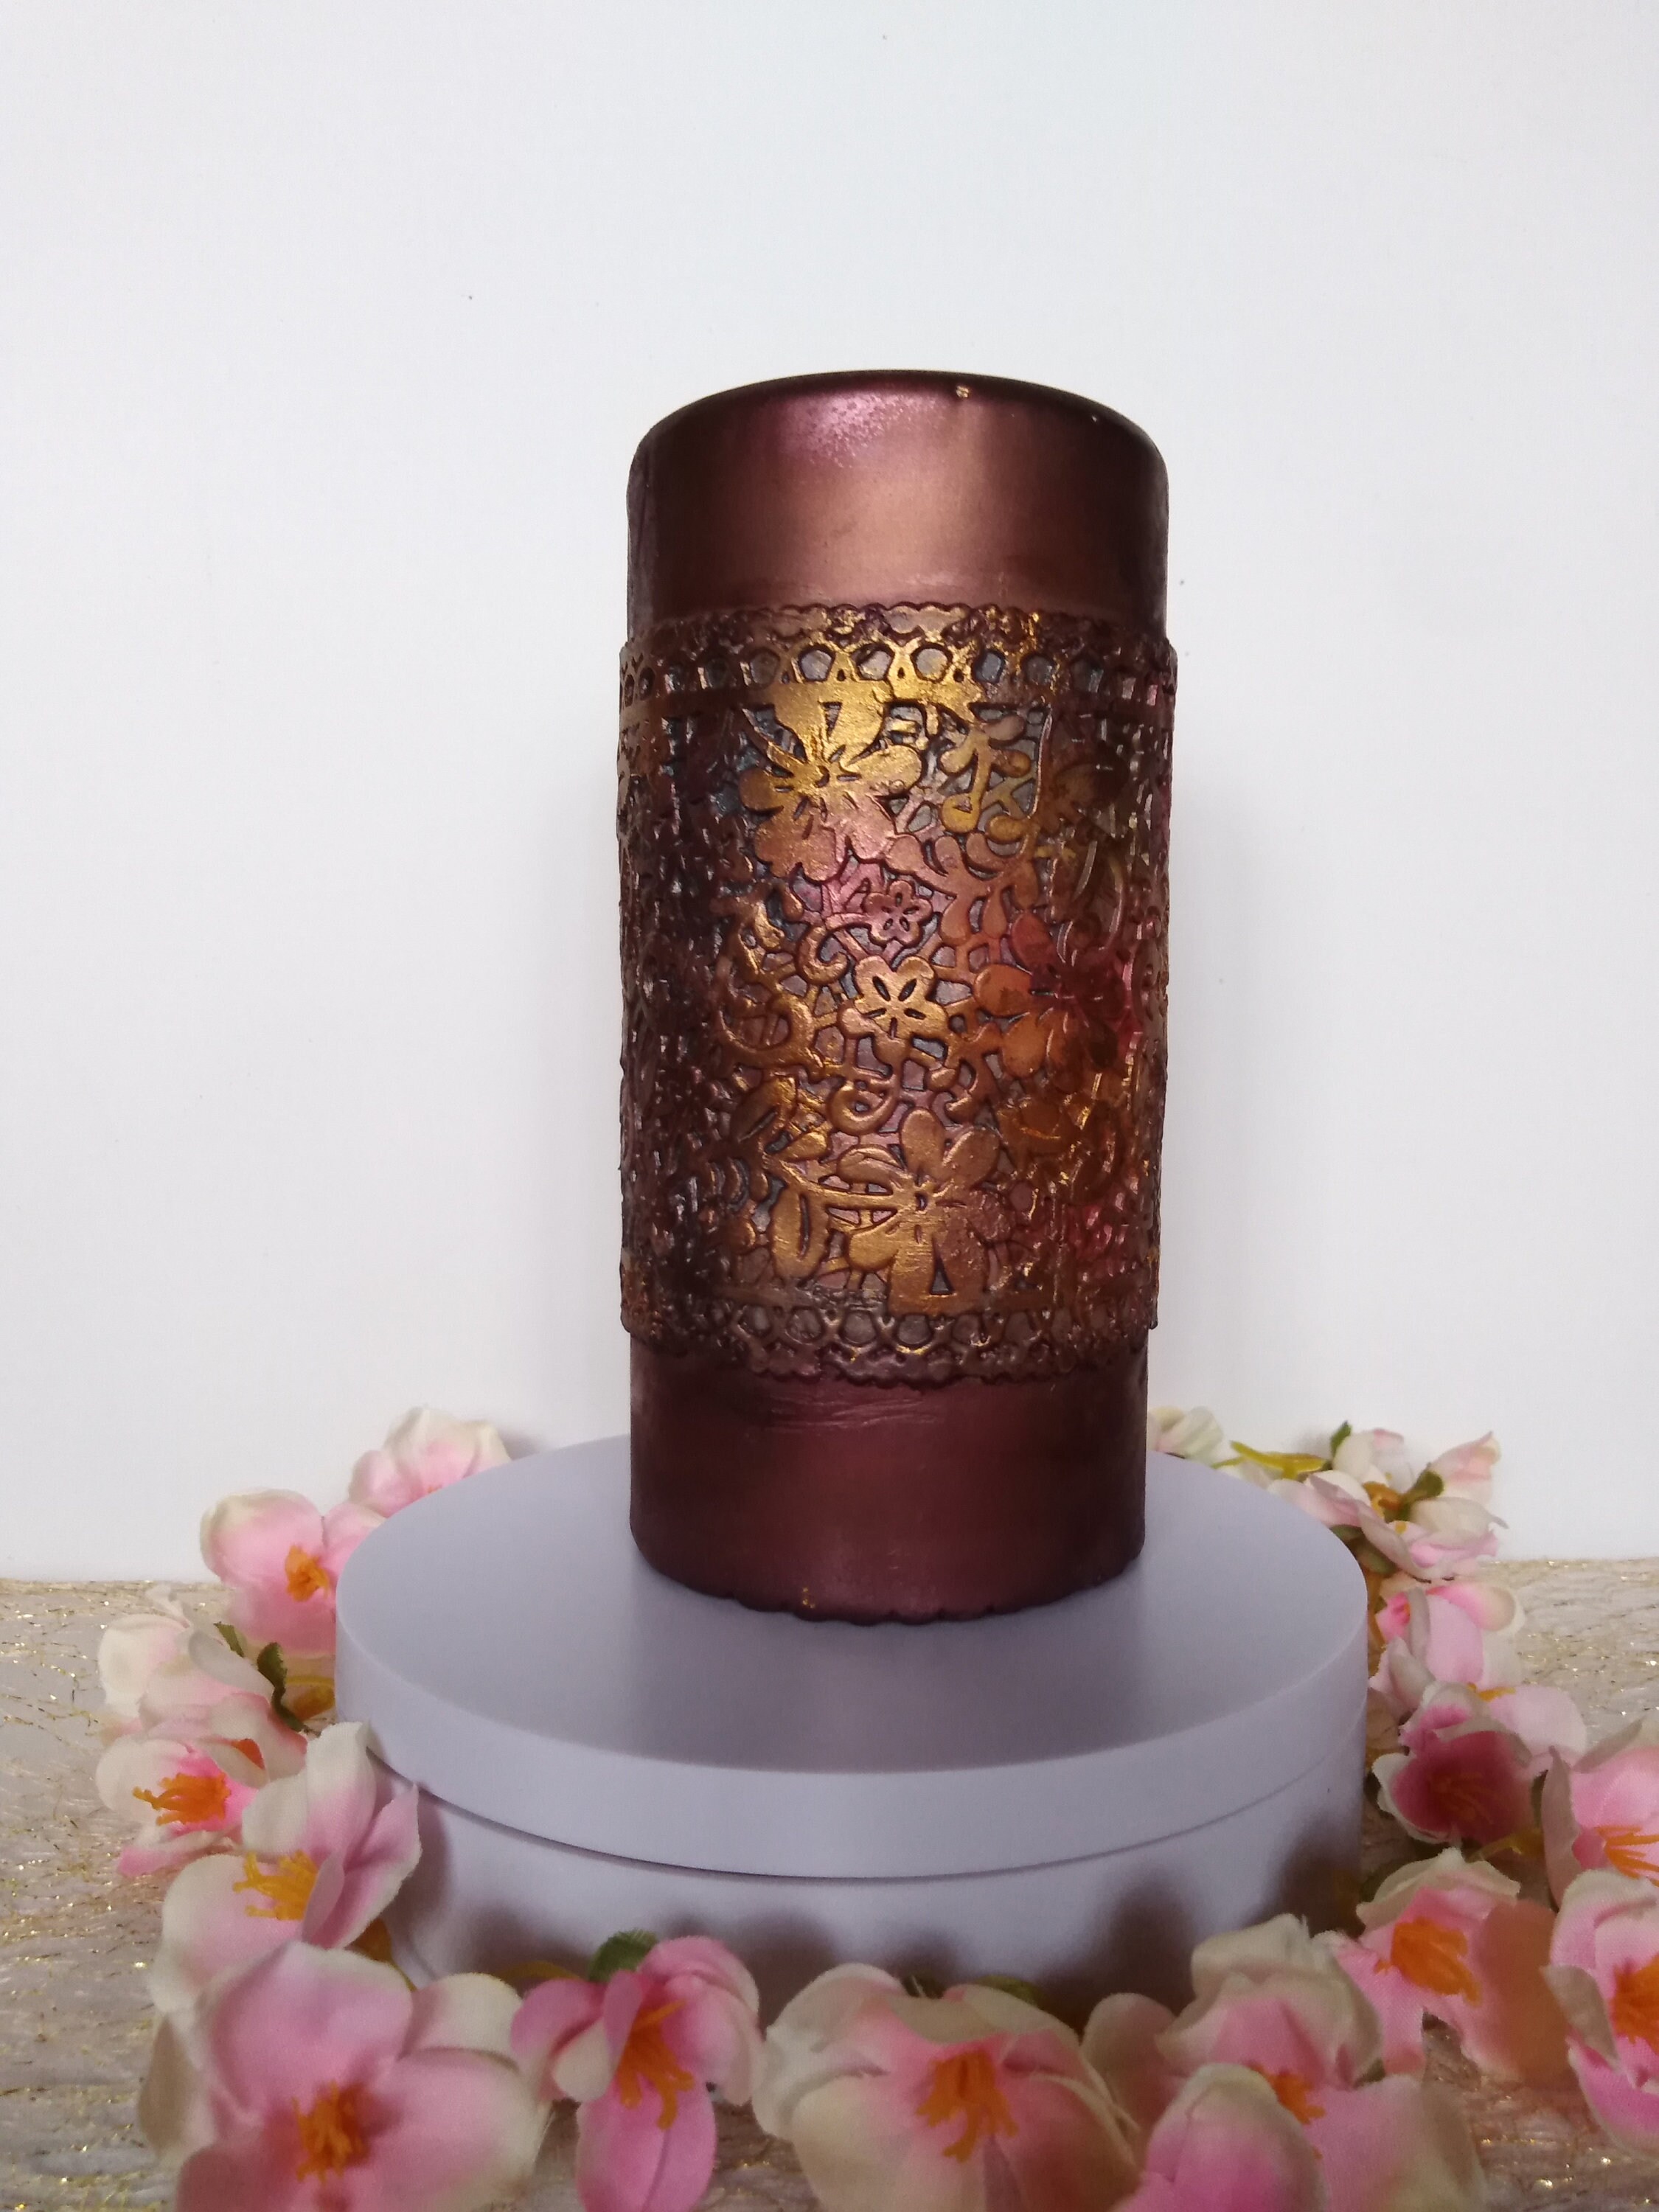 Gold Glitter Unscented Decorative Pillar Candle Decorative Use